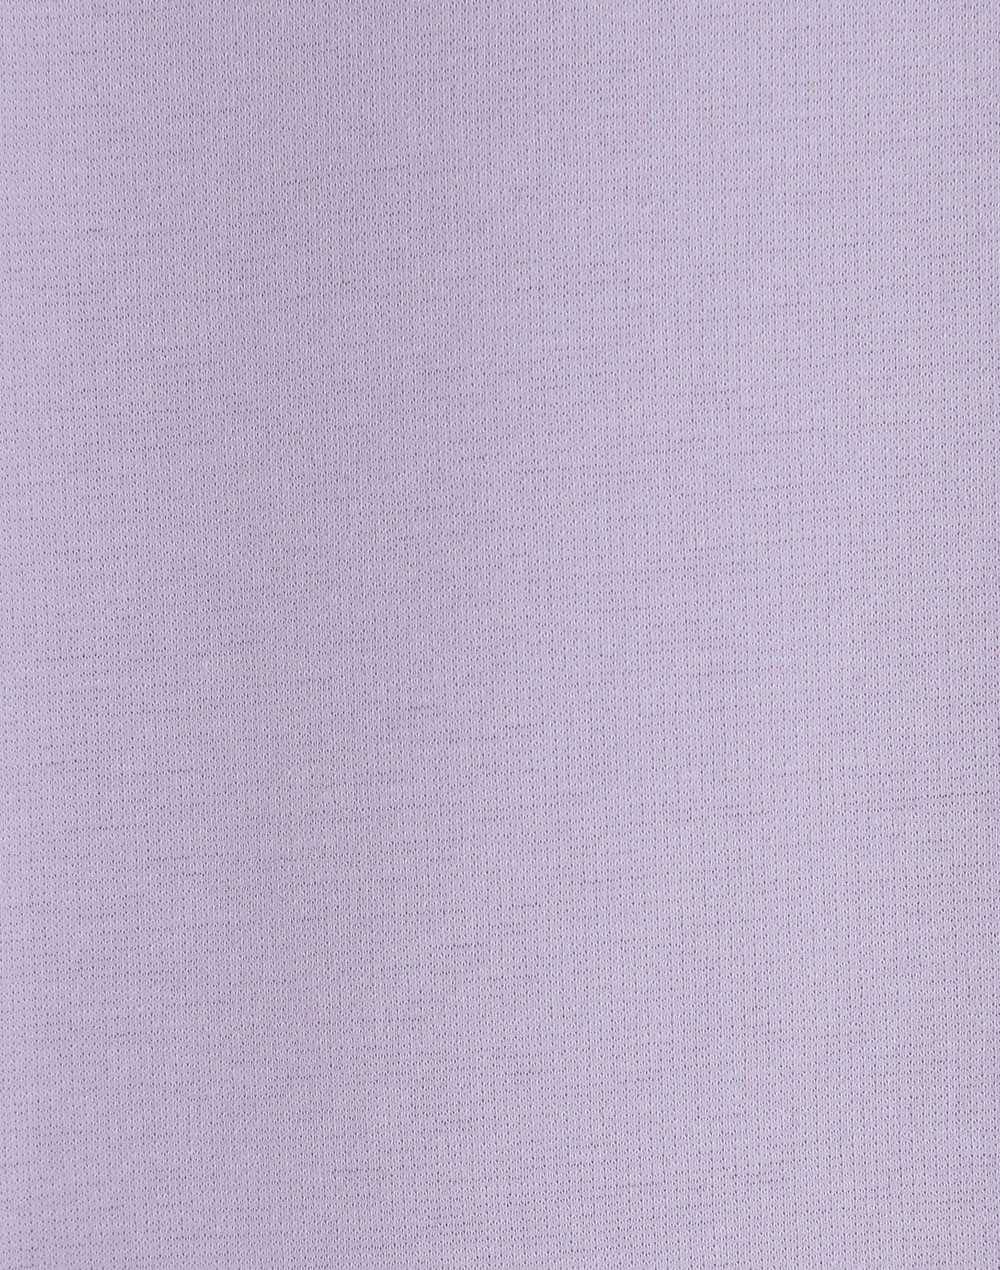 yuru puff sleeve T・t283458（トップス/Tシャツ）| rirry_71 | 東京ガールズマーケット